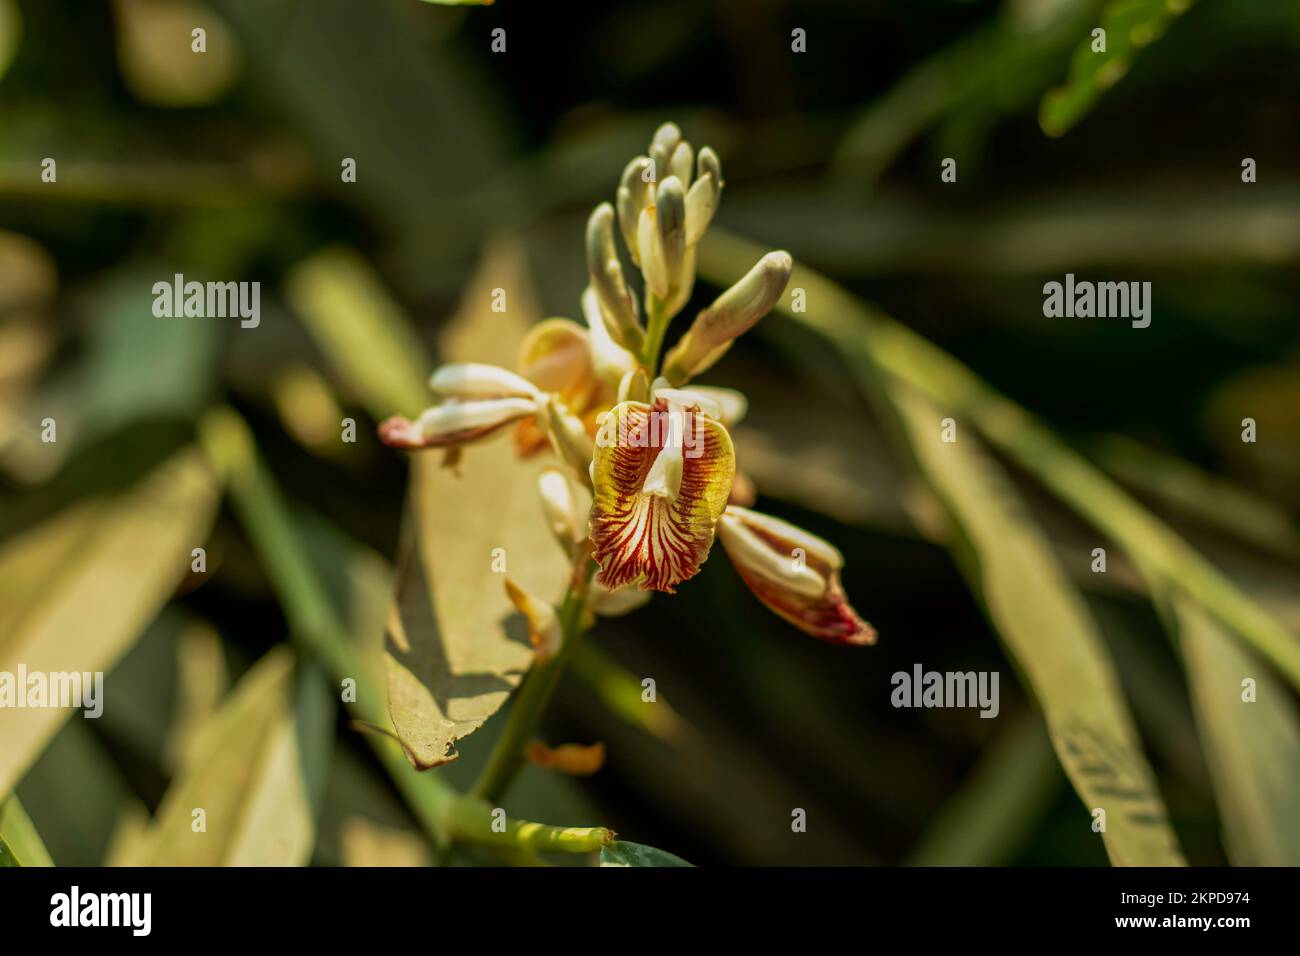 Elaichi, Cardamom, Green cardamom botanically Elettaria card amomum, or elachi flower known as Elettaria cardamom from zinger family Zingiberaceae Stock Photo